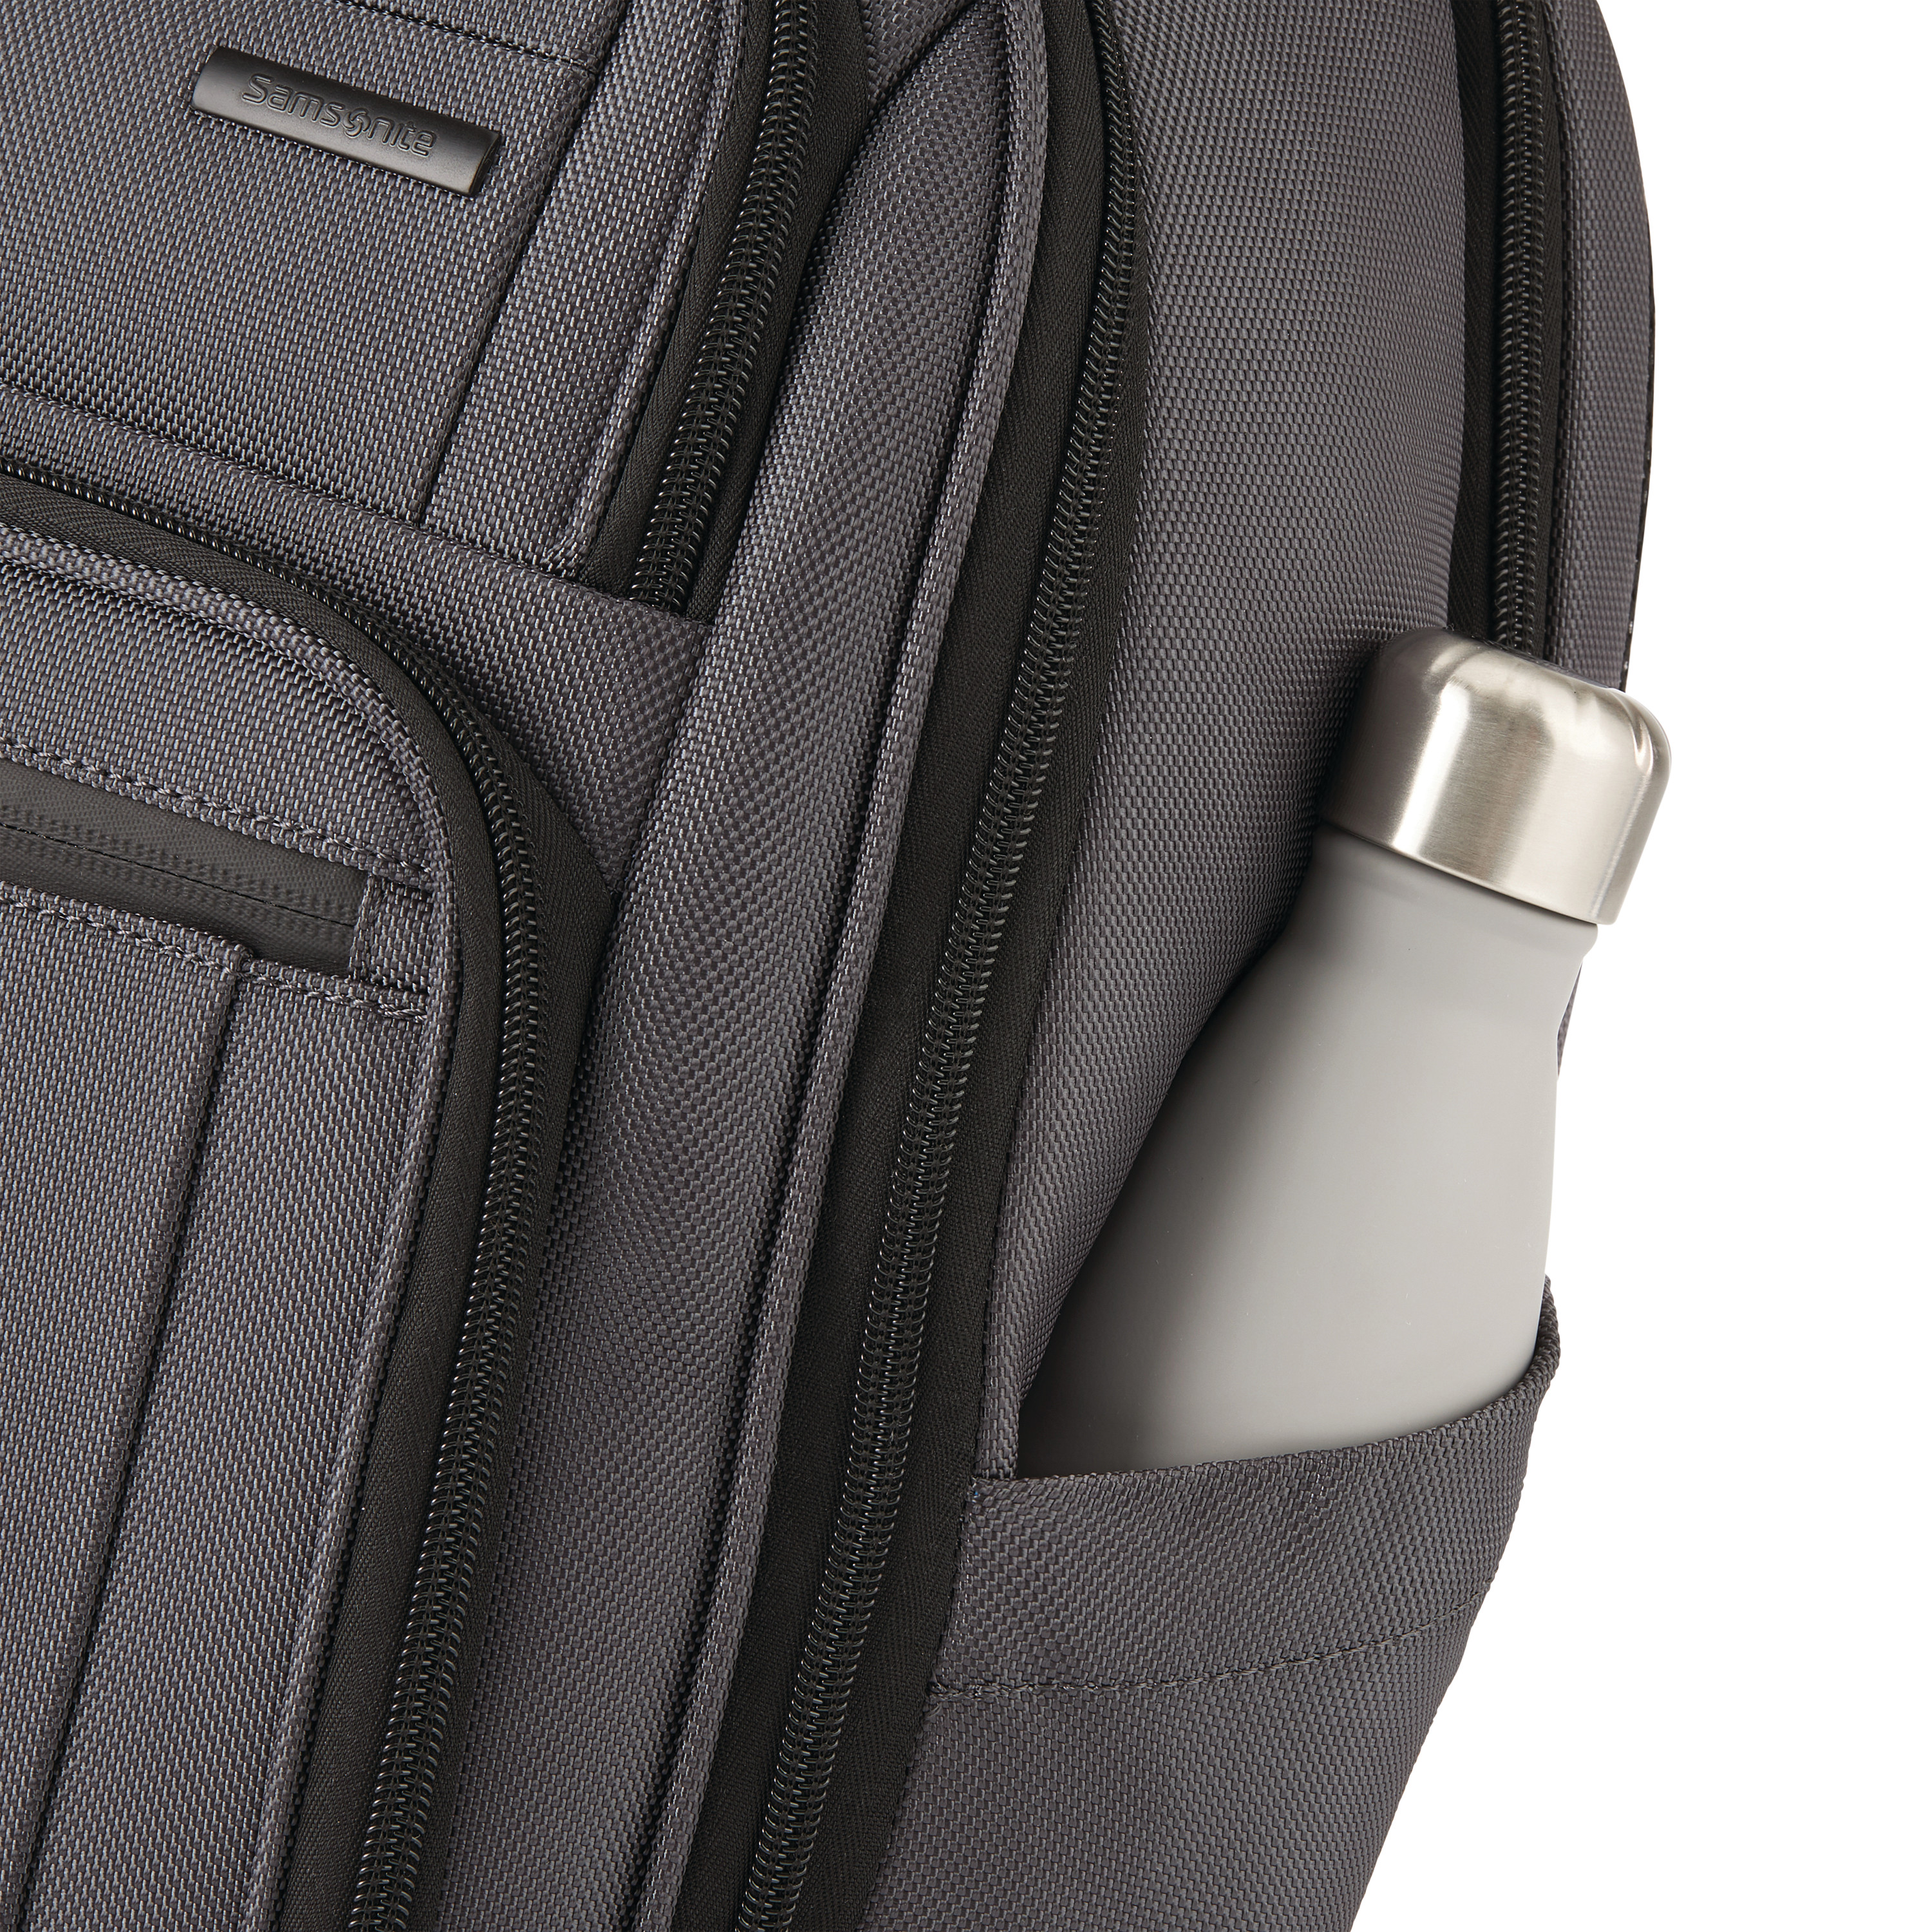 Novex Buy Backpack for | Laptop US 74.99 USD Samsonite